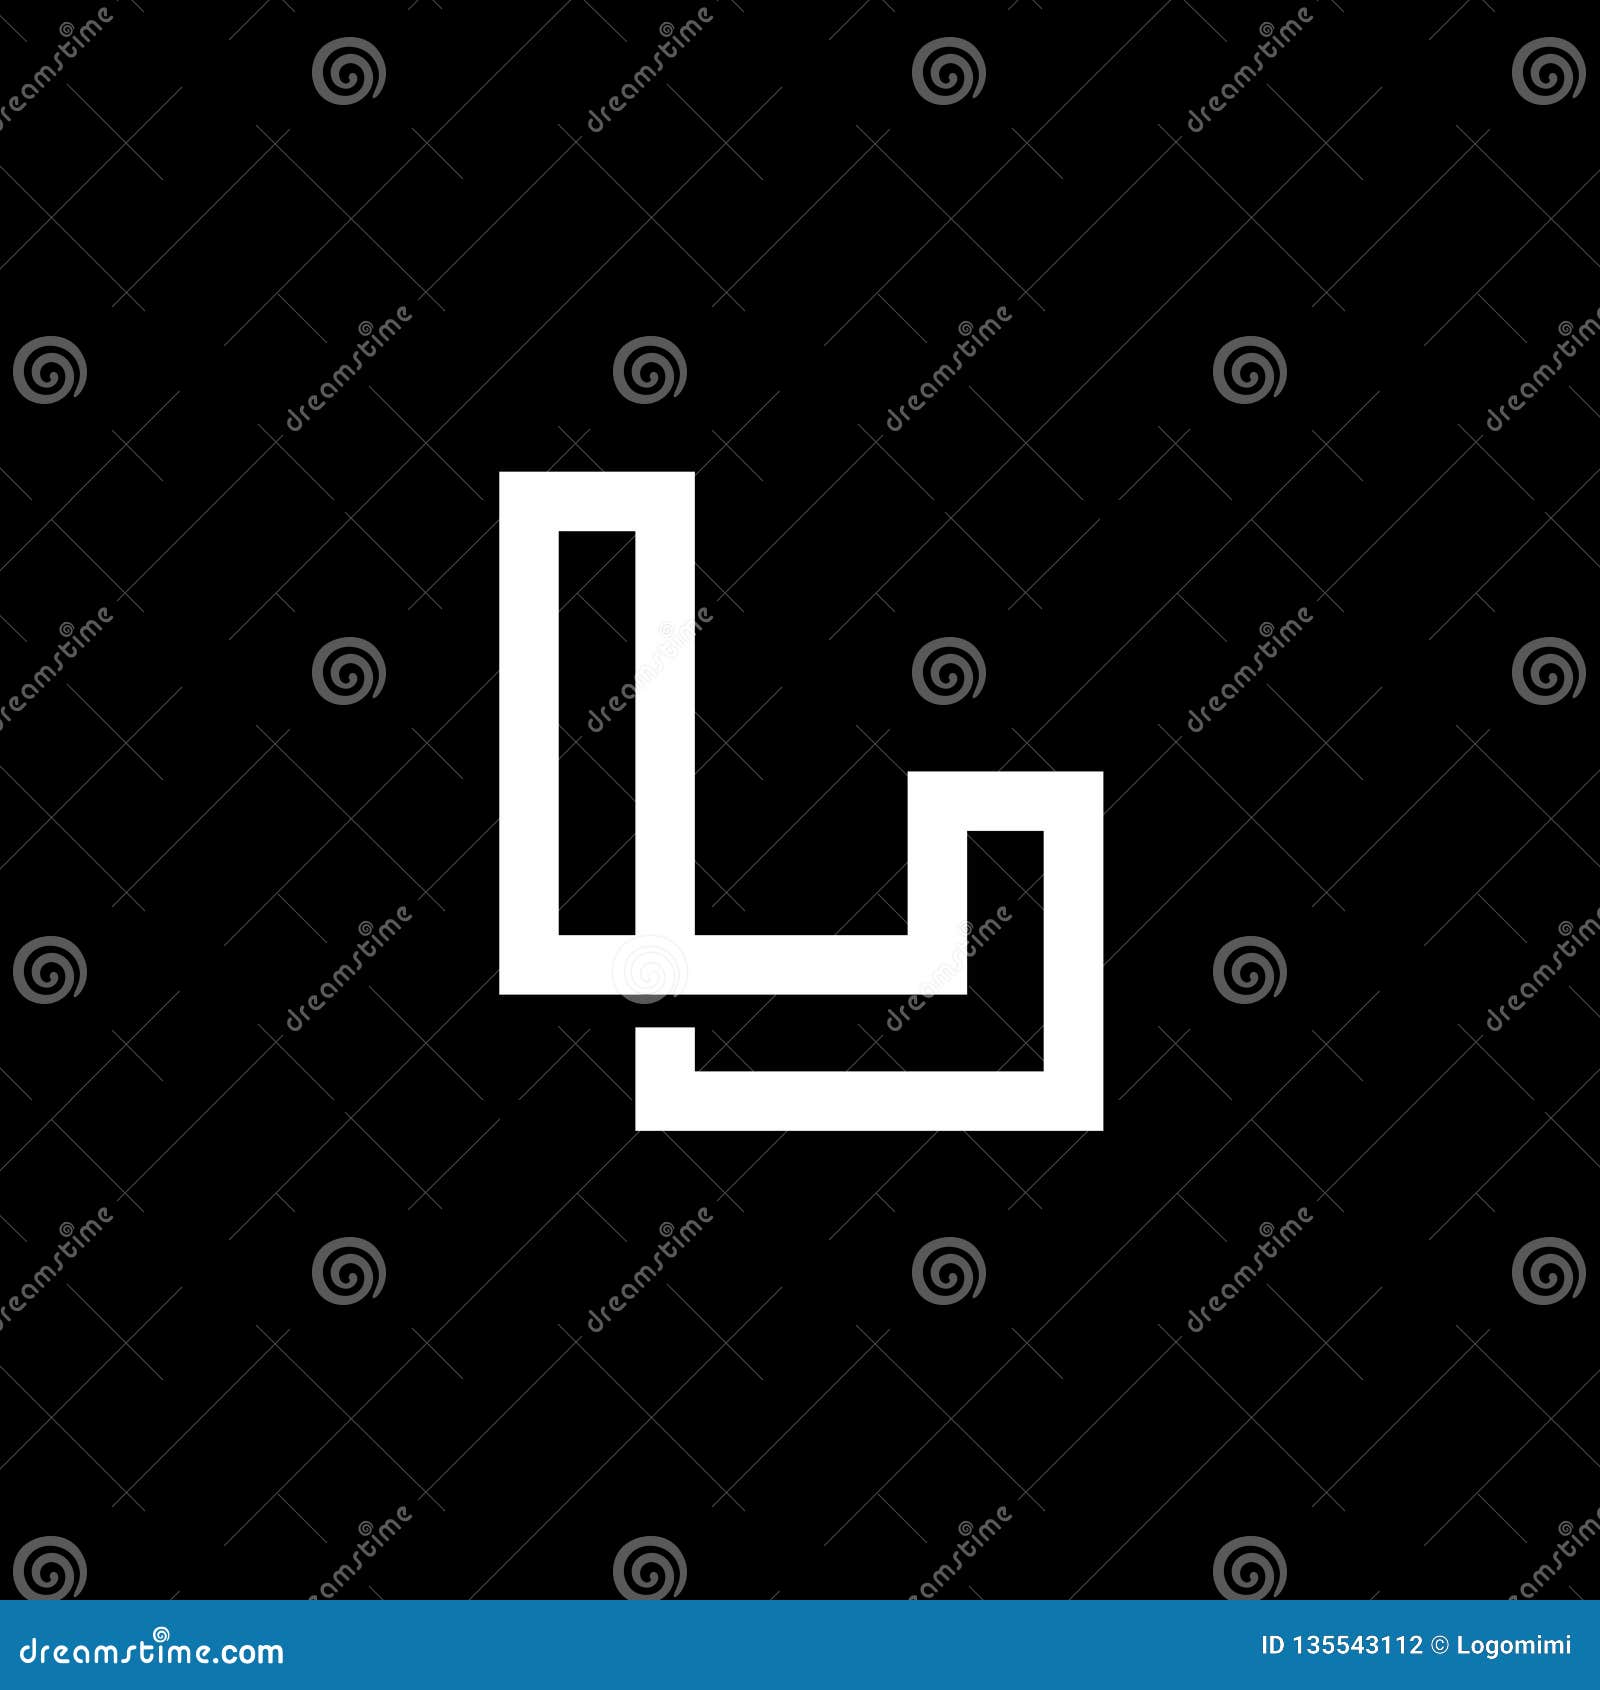 Premium Vector  Initial letter lv logo design outstanding creative modern  symbol sign